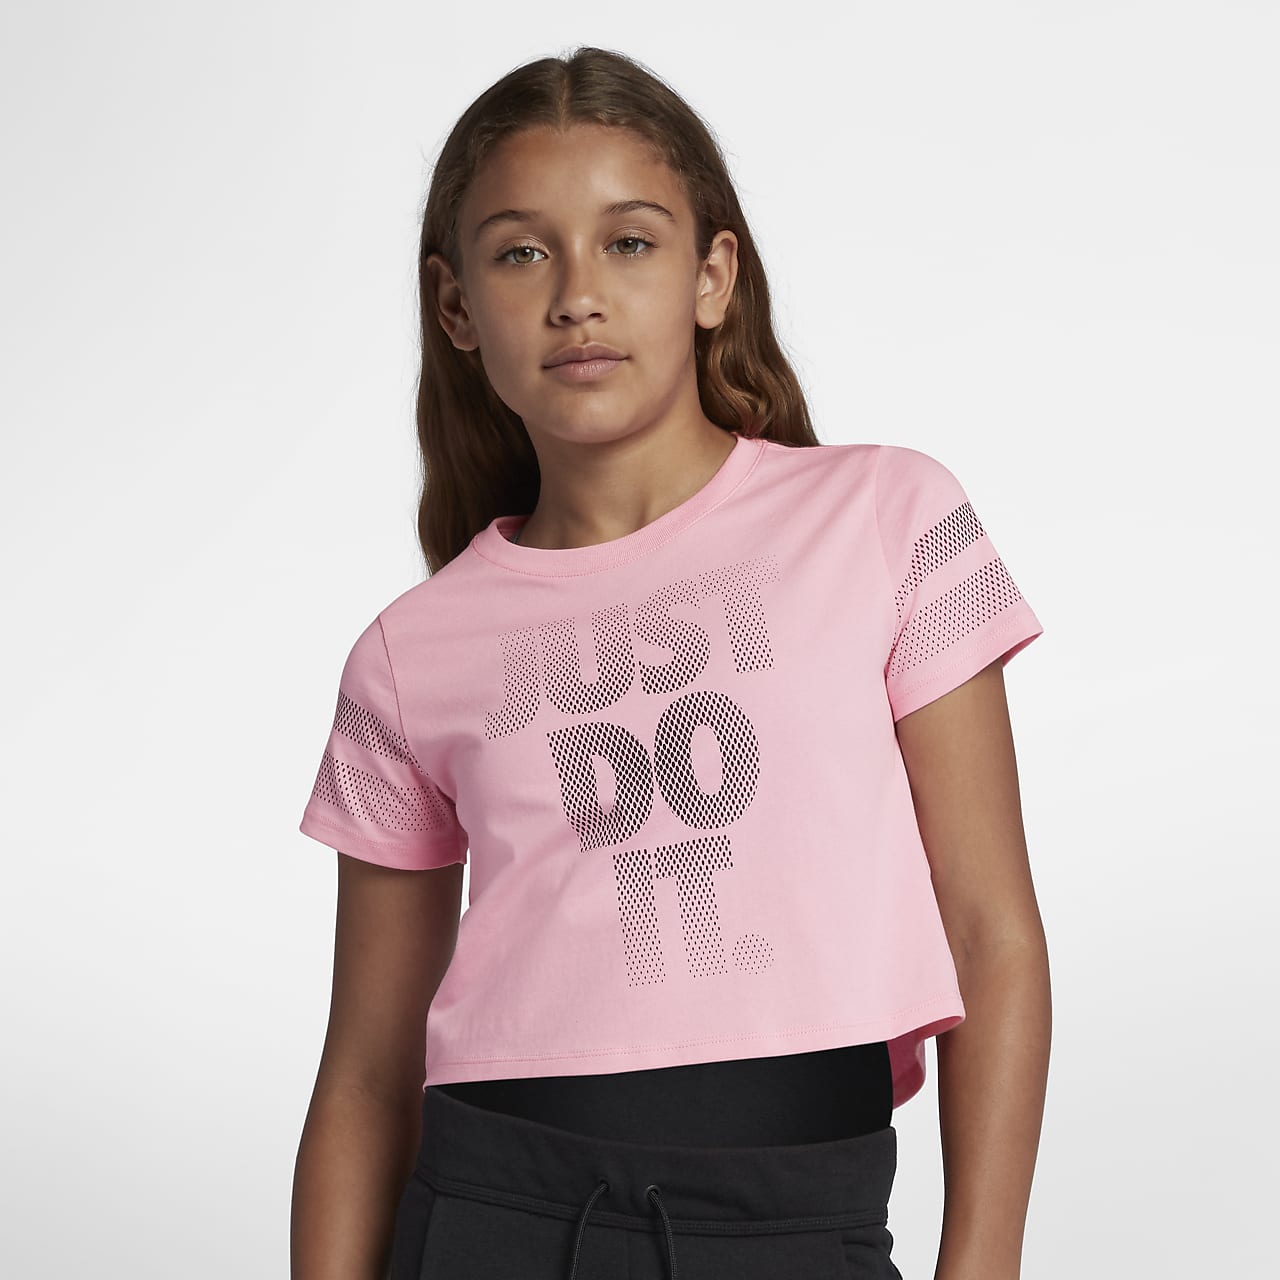 Топики для девочек 12. Nike Sportswear футболка укороченная NSW. Короткая футболка для девочки. Укороченная футболка для девочек. Майка для девочки.